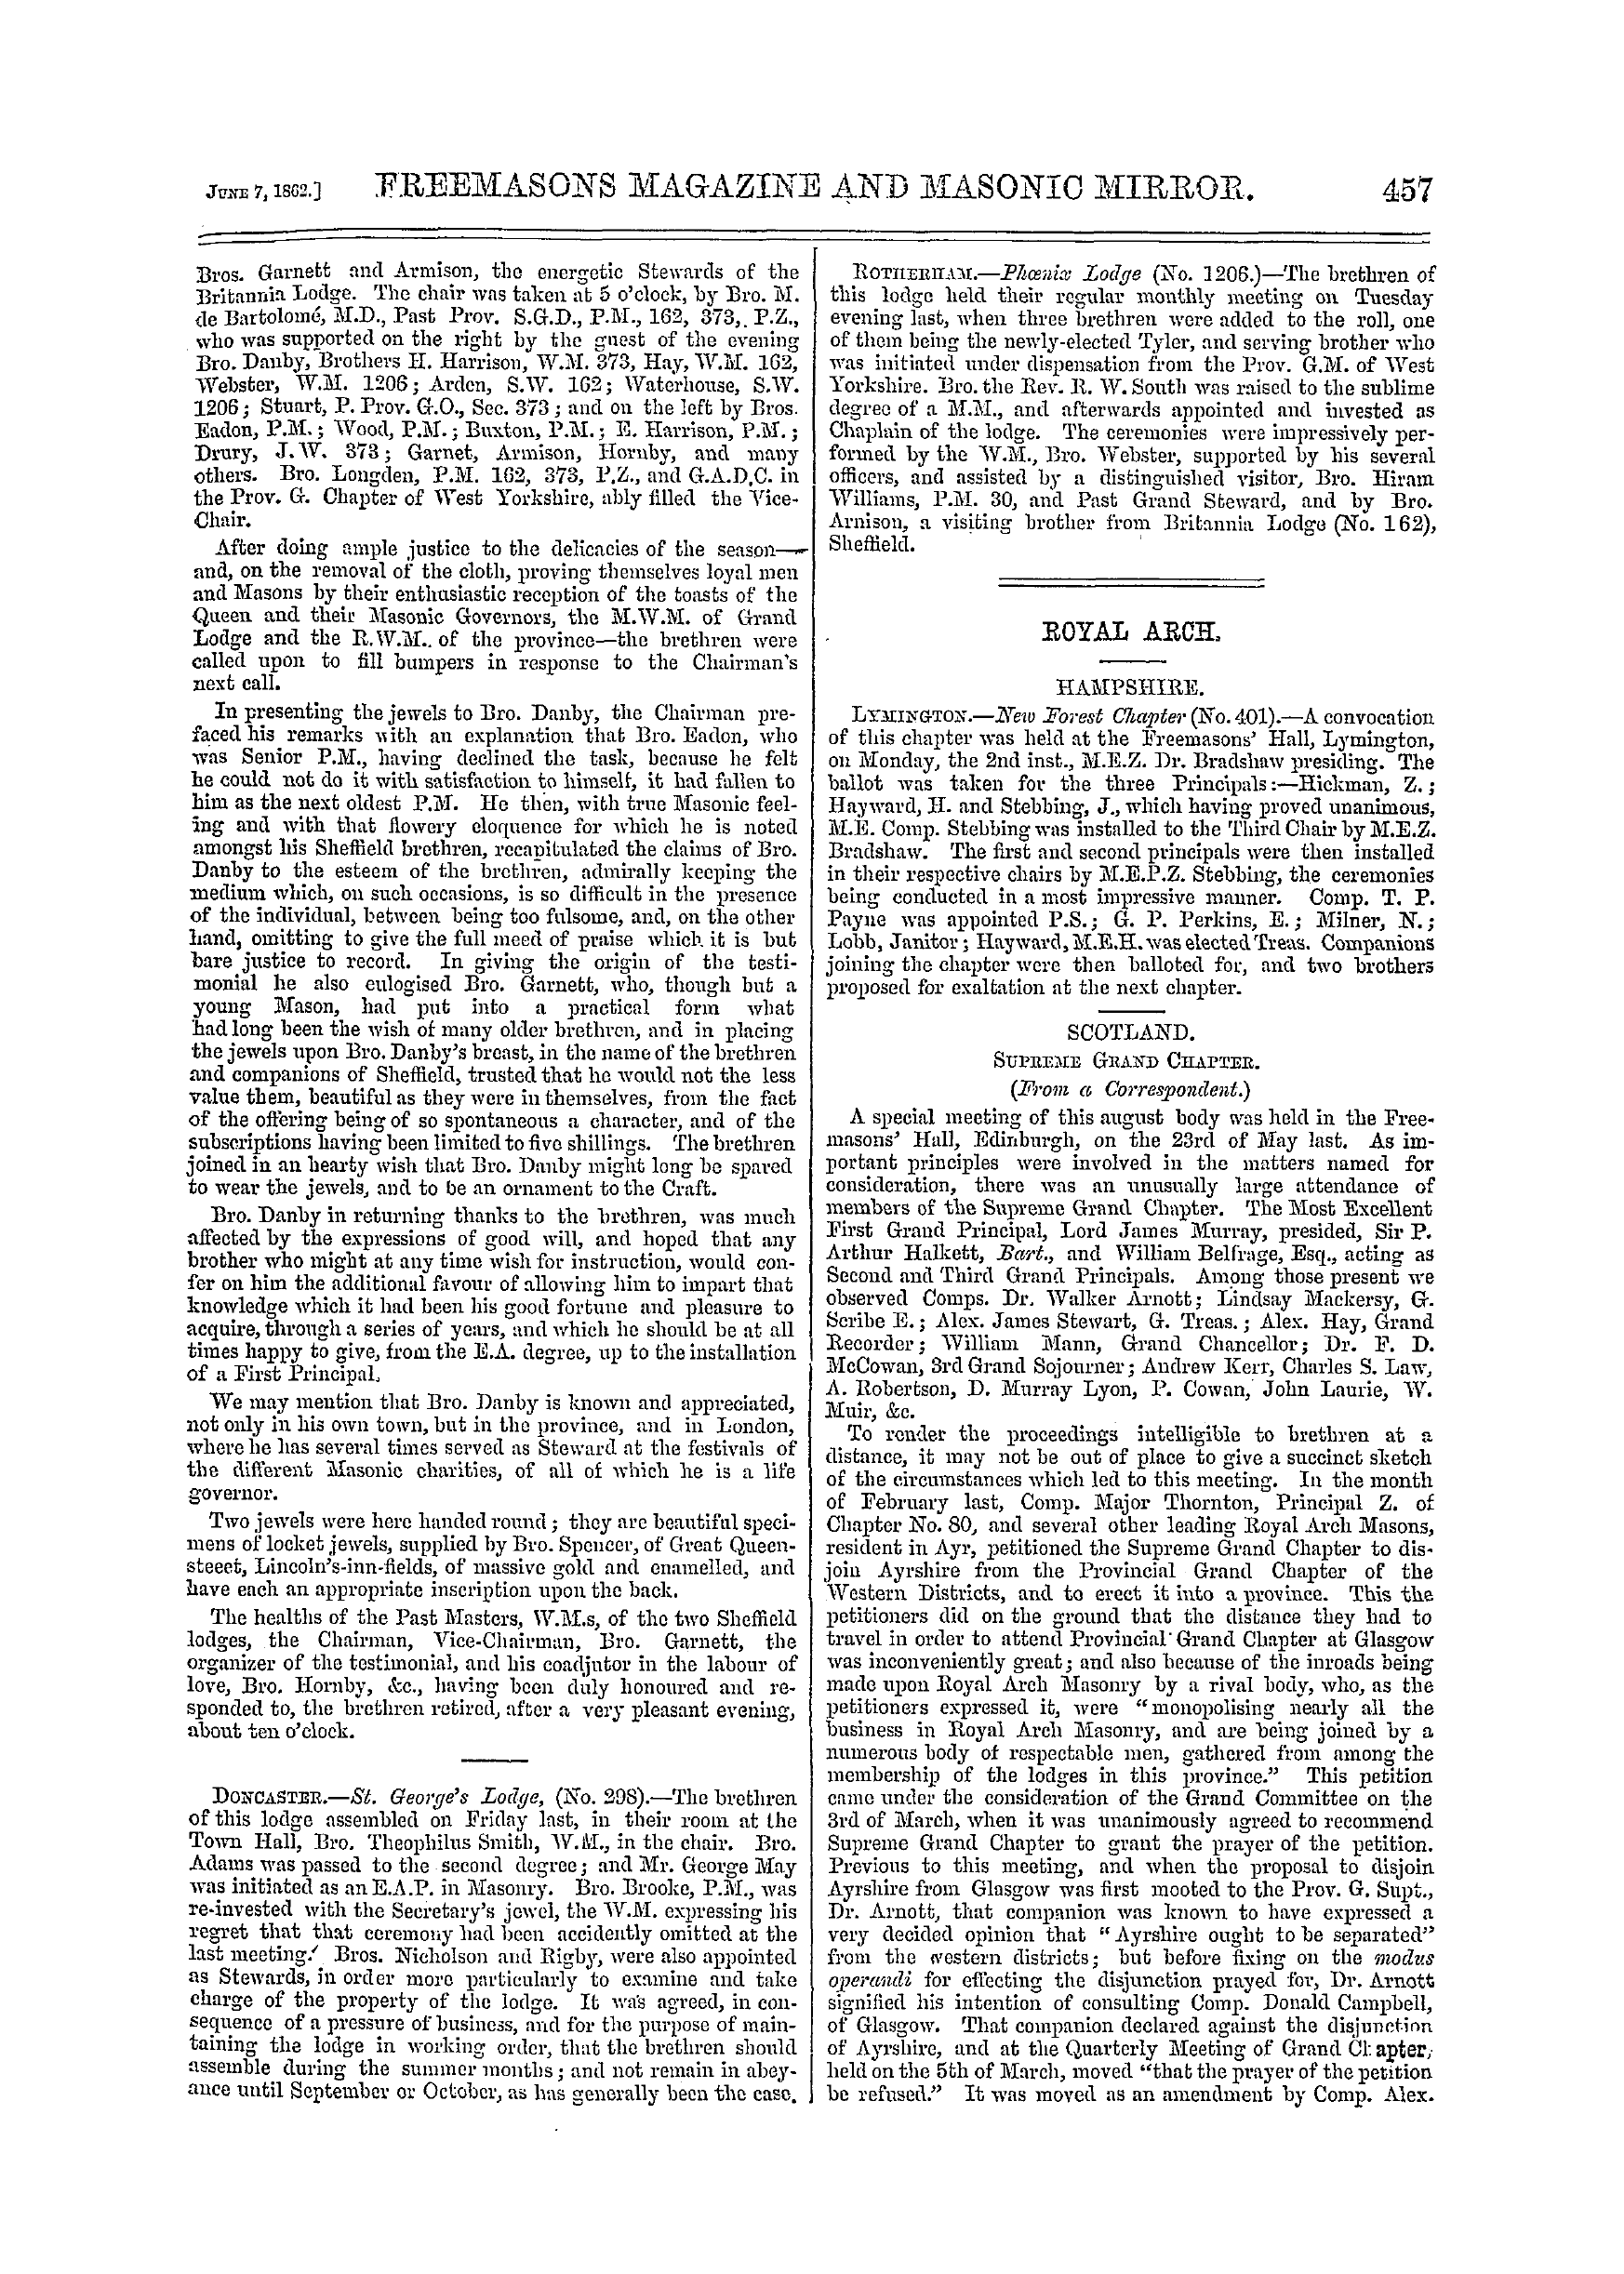 The Freemasons' Monthly Magazine: 1862-06-07 - Provincial.